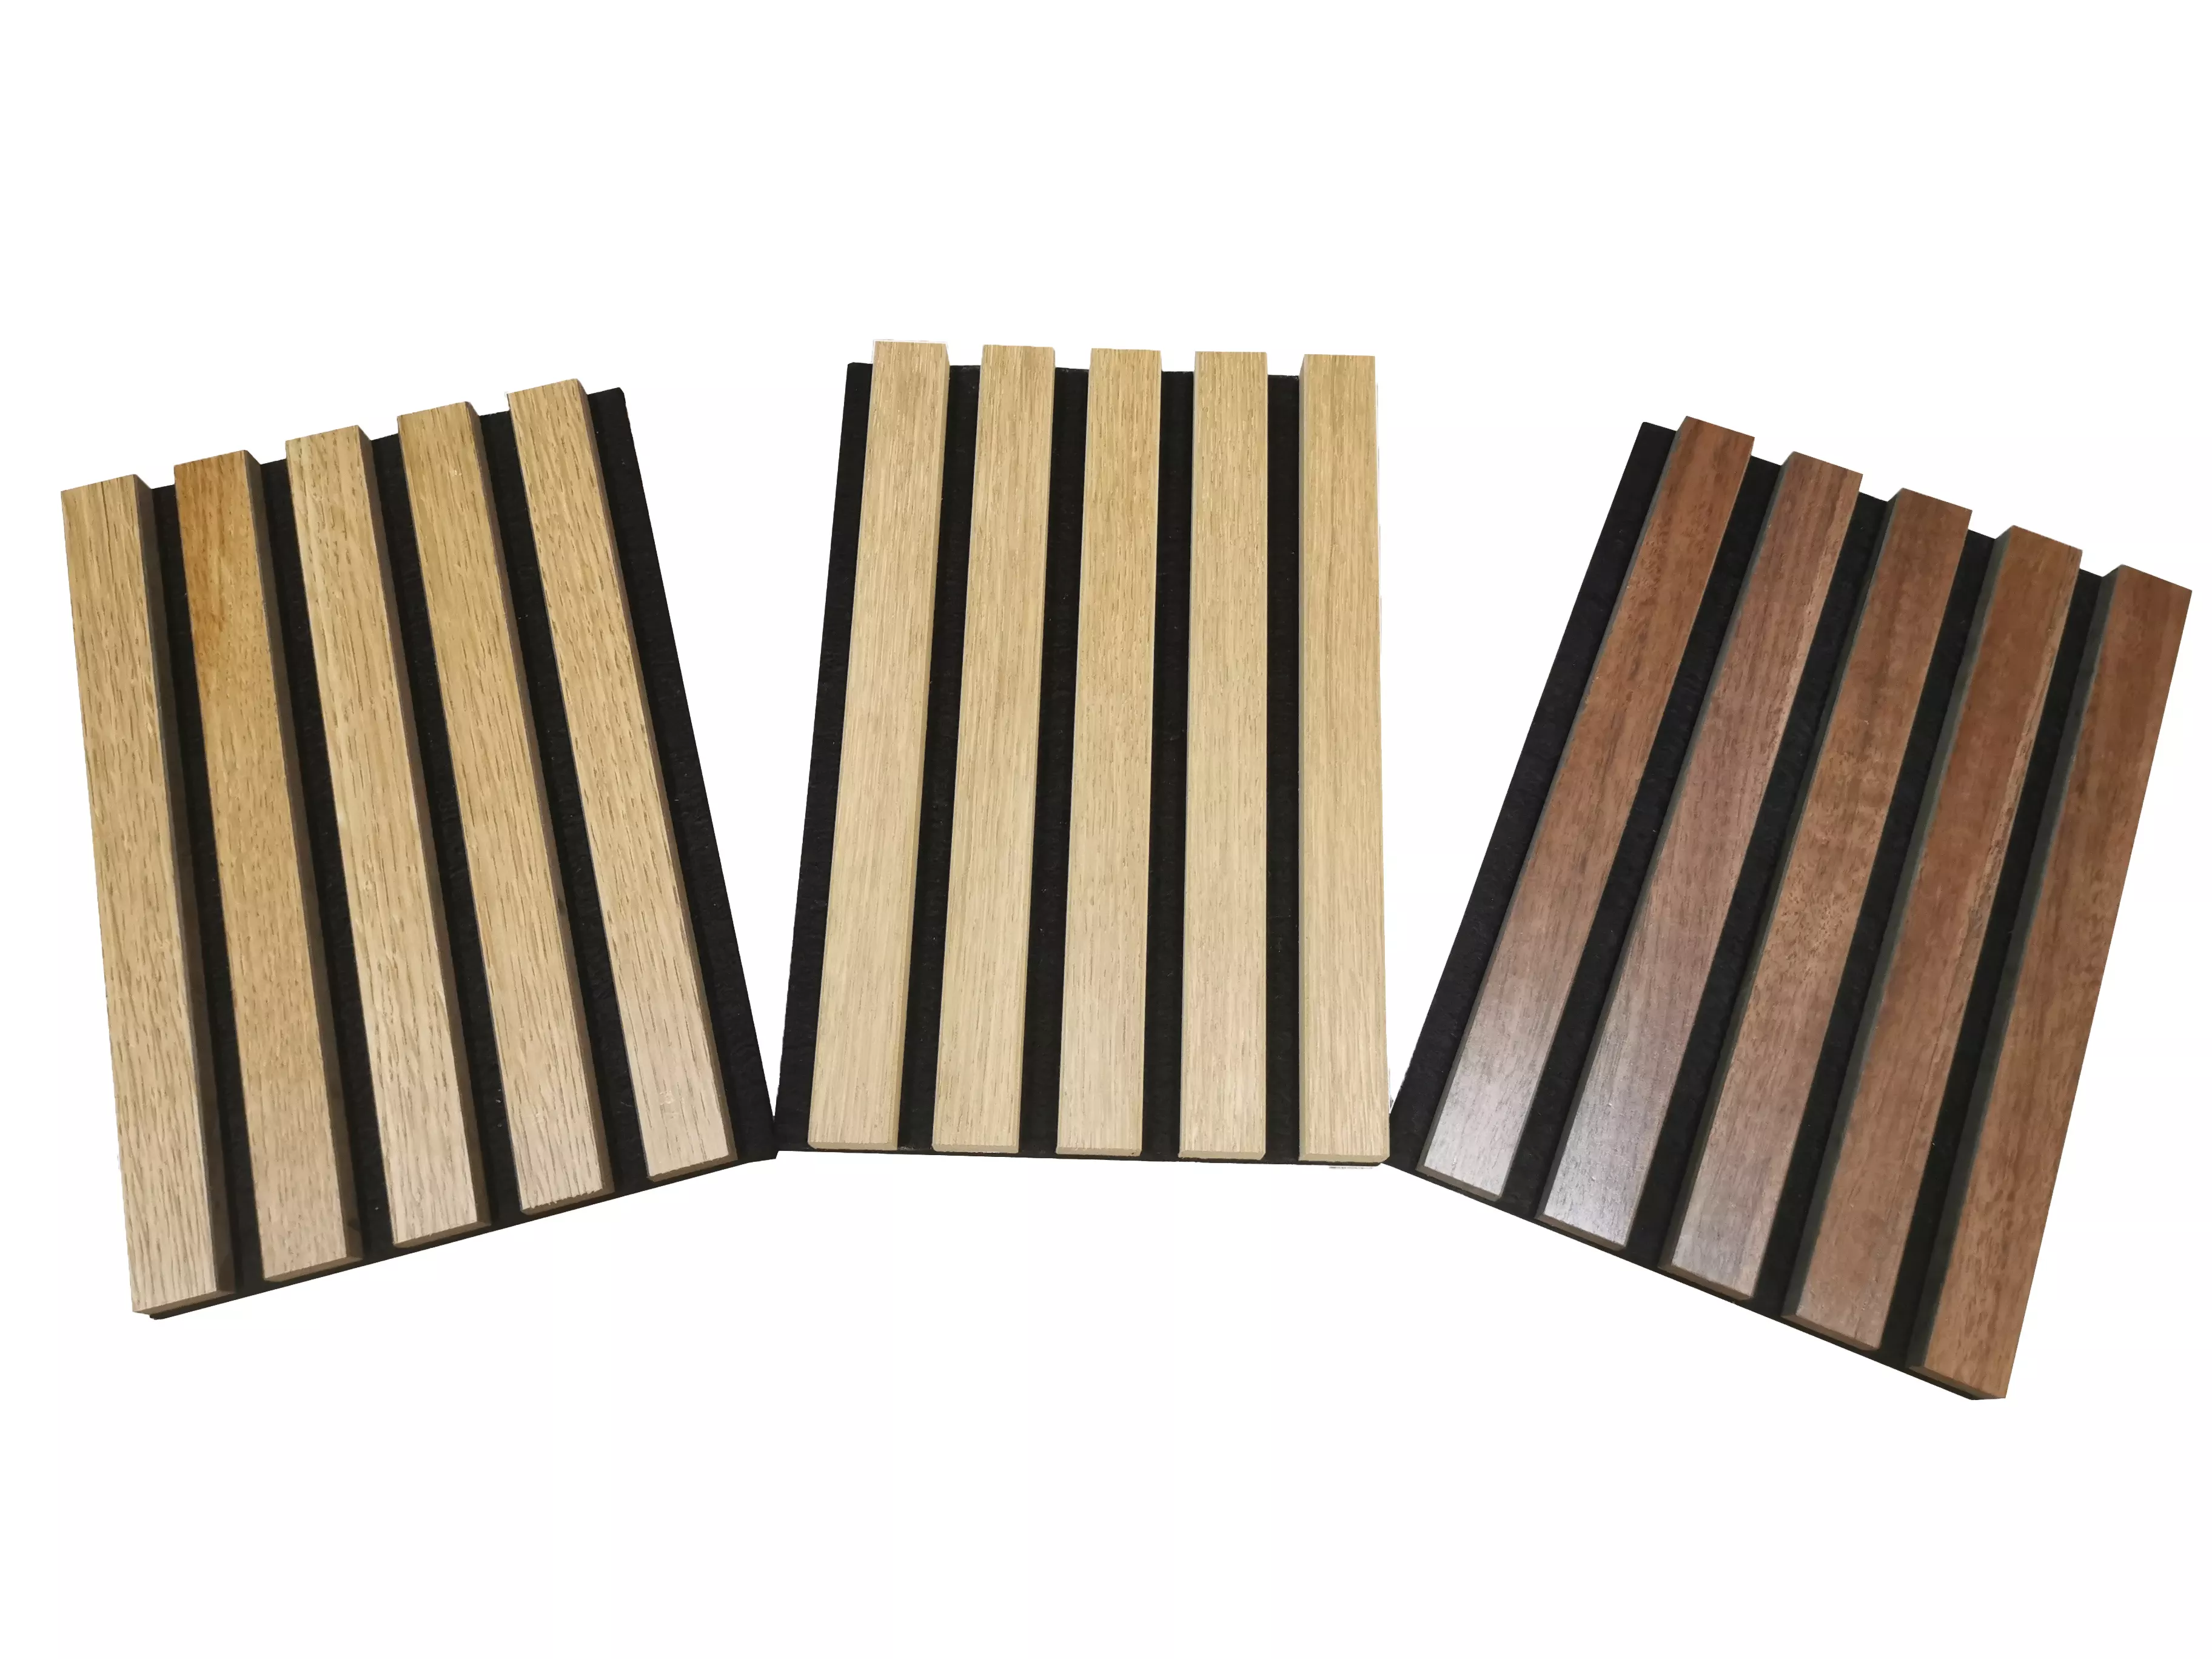 Wooden acoustic panels, Sound dampening panels - WoodUpp